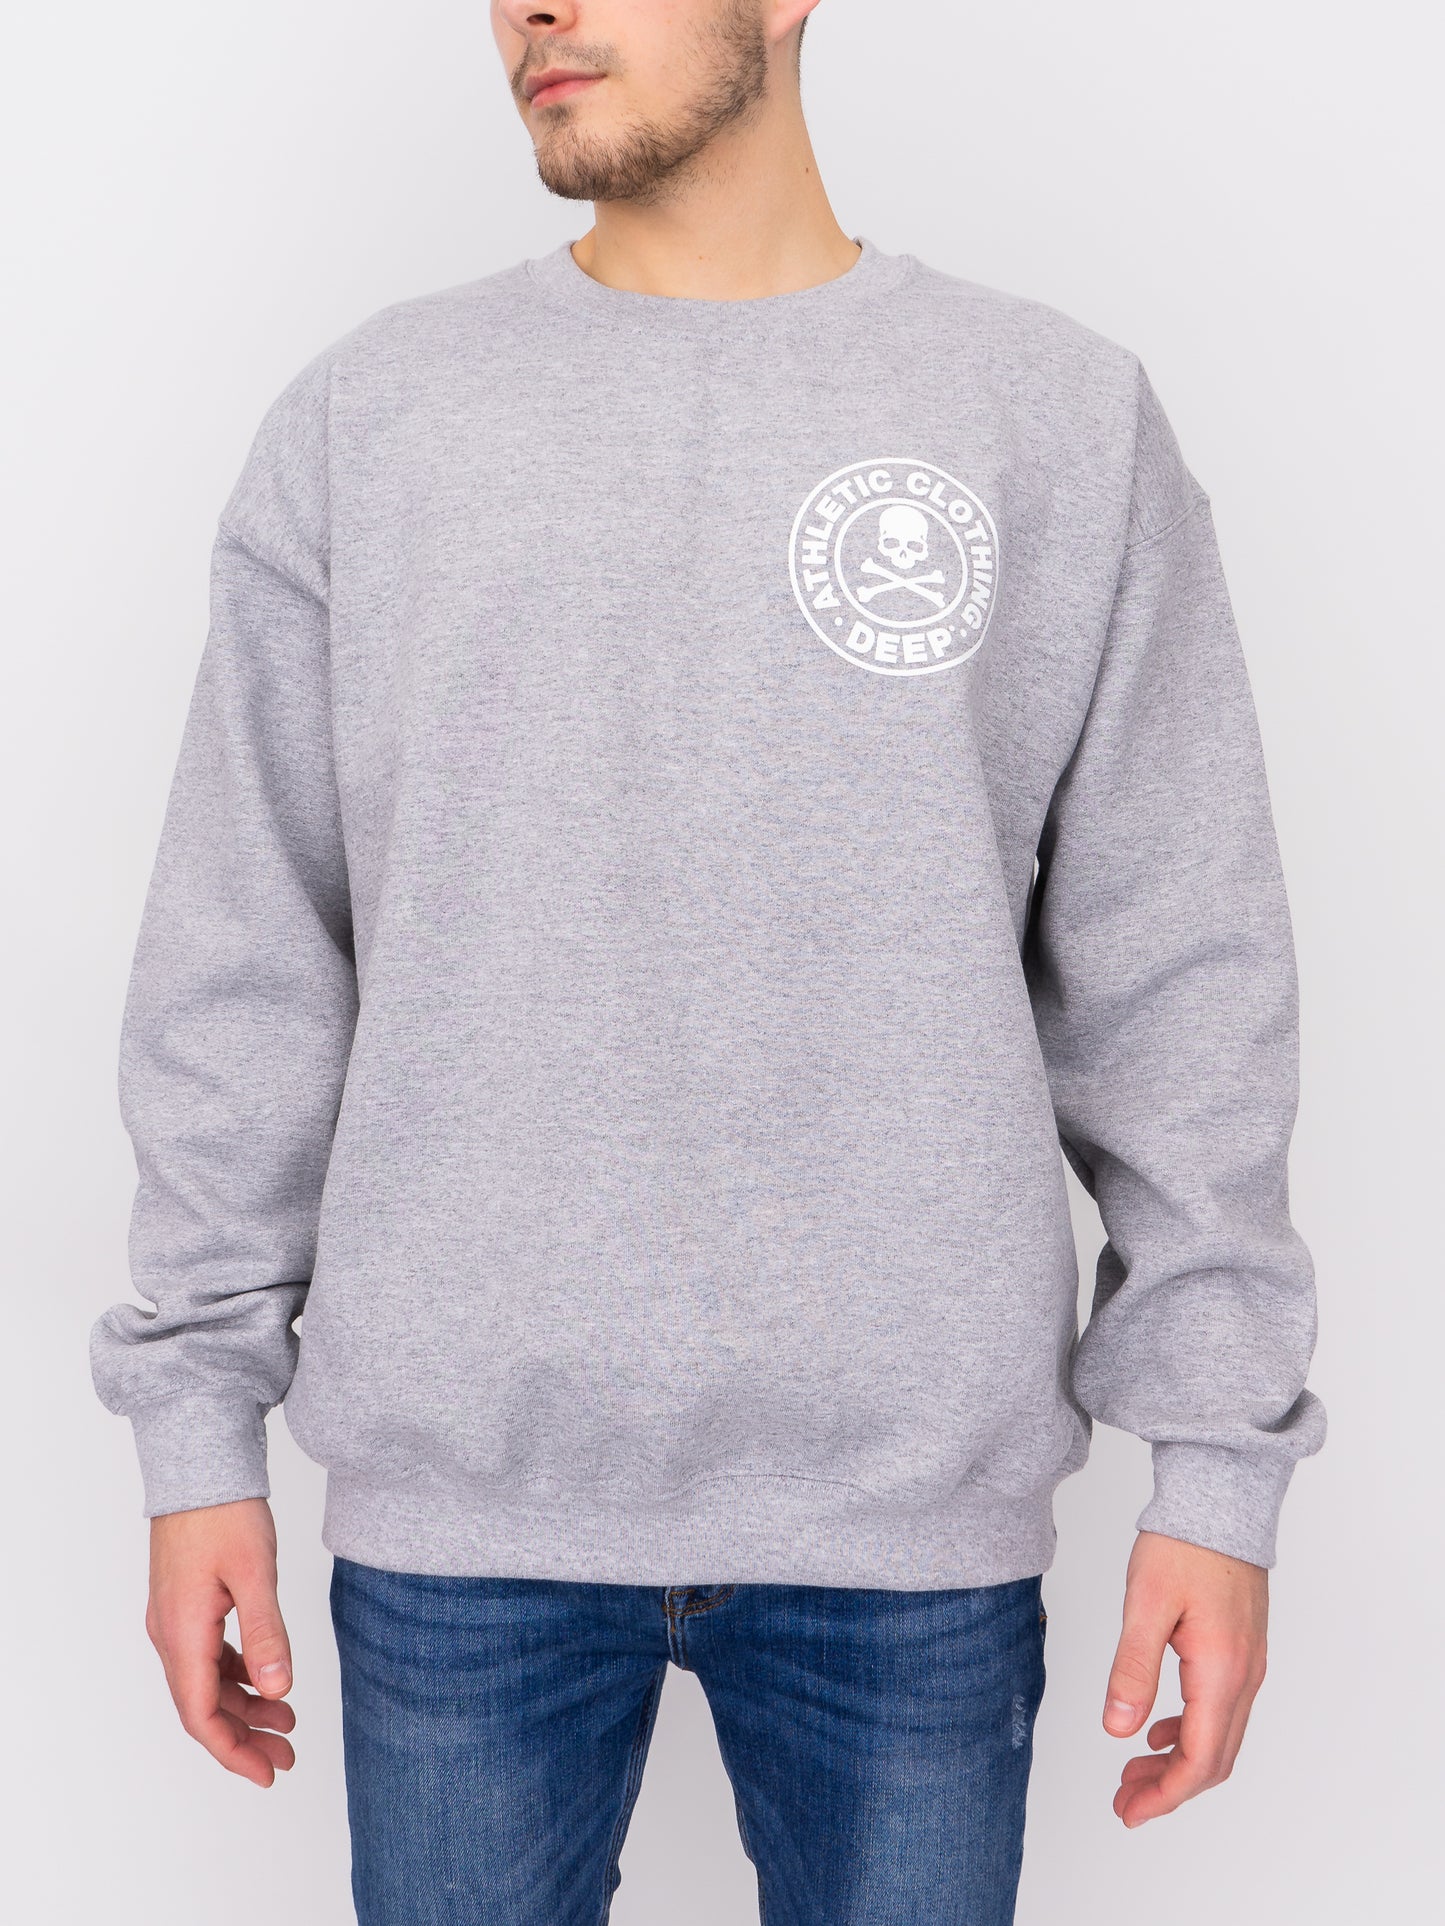 Athletic Crew Neck Sweatshirt - Sports Grey - DEEP Clothing